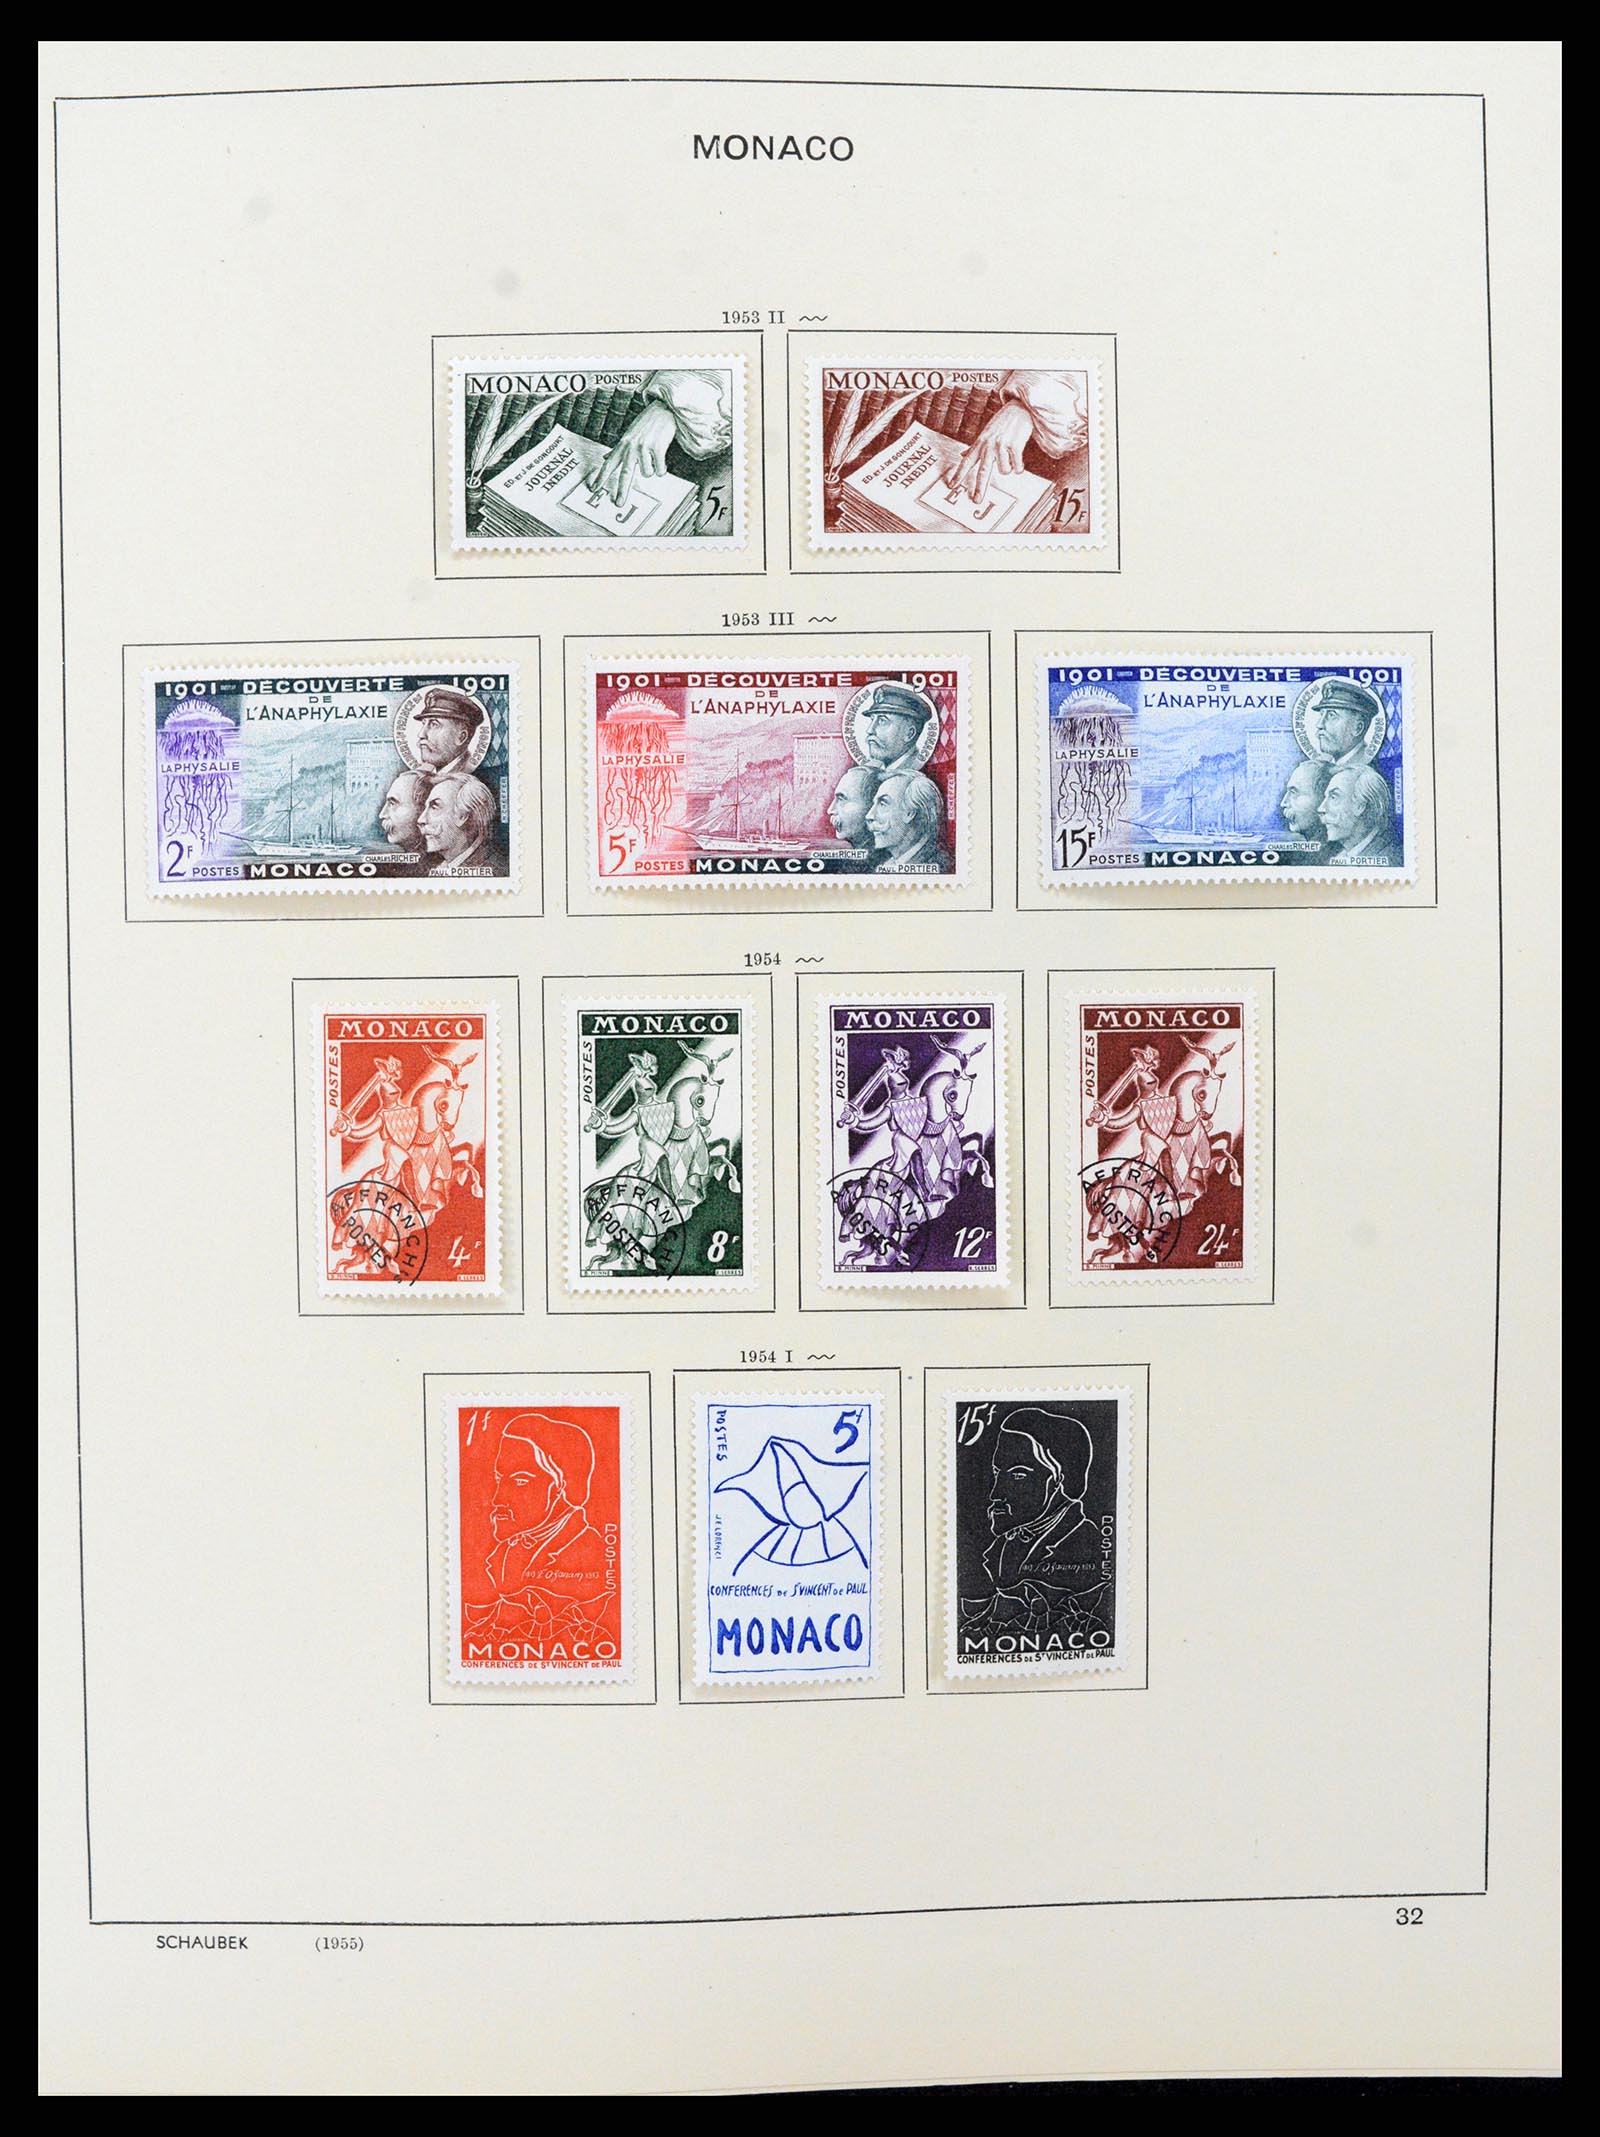 37570 037 - Stamp collection 37570 Monaco 1885-2013.